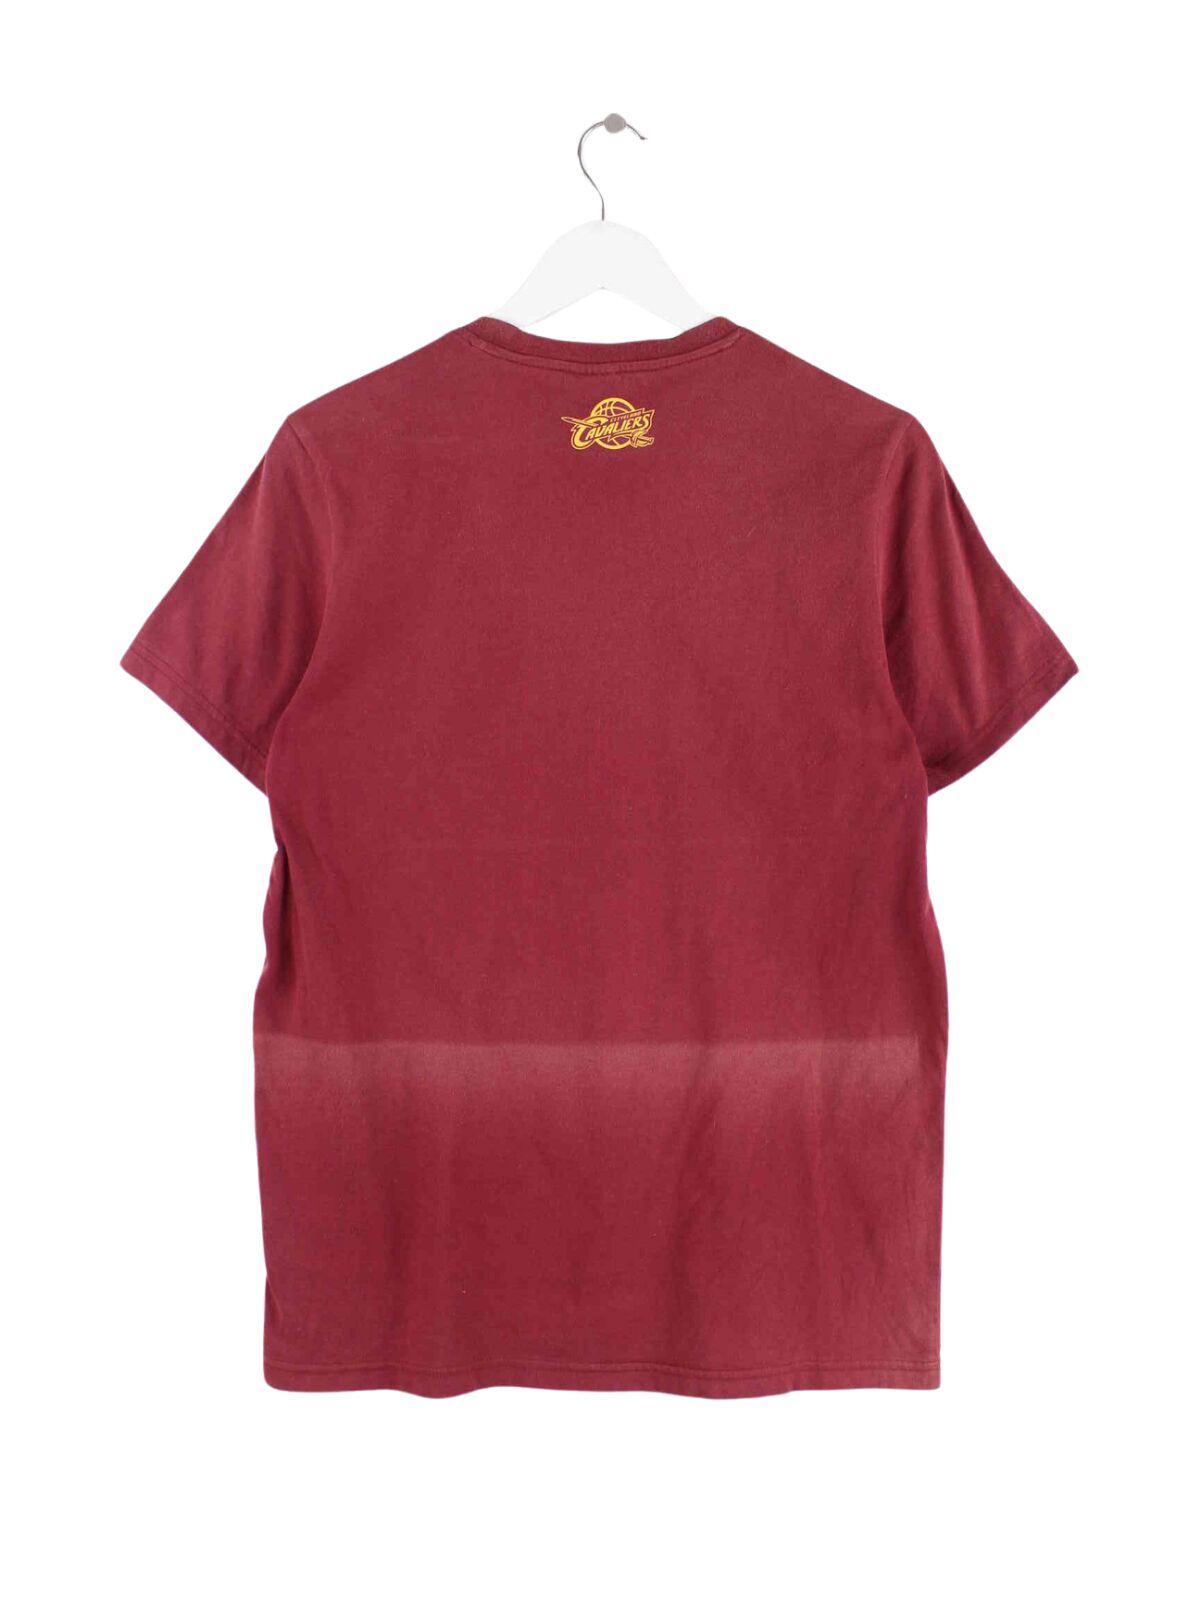 Adidas NBA Cleveland Cavaliers LeBron James T-Shirt Rot L (back image)